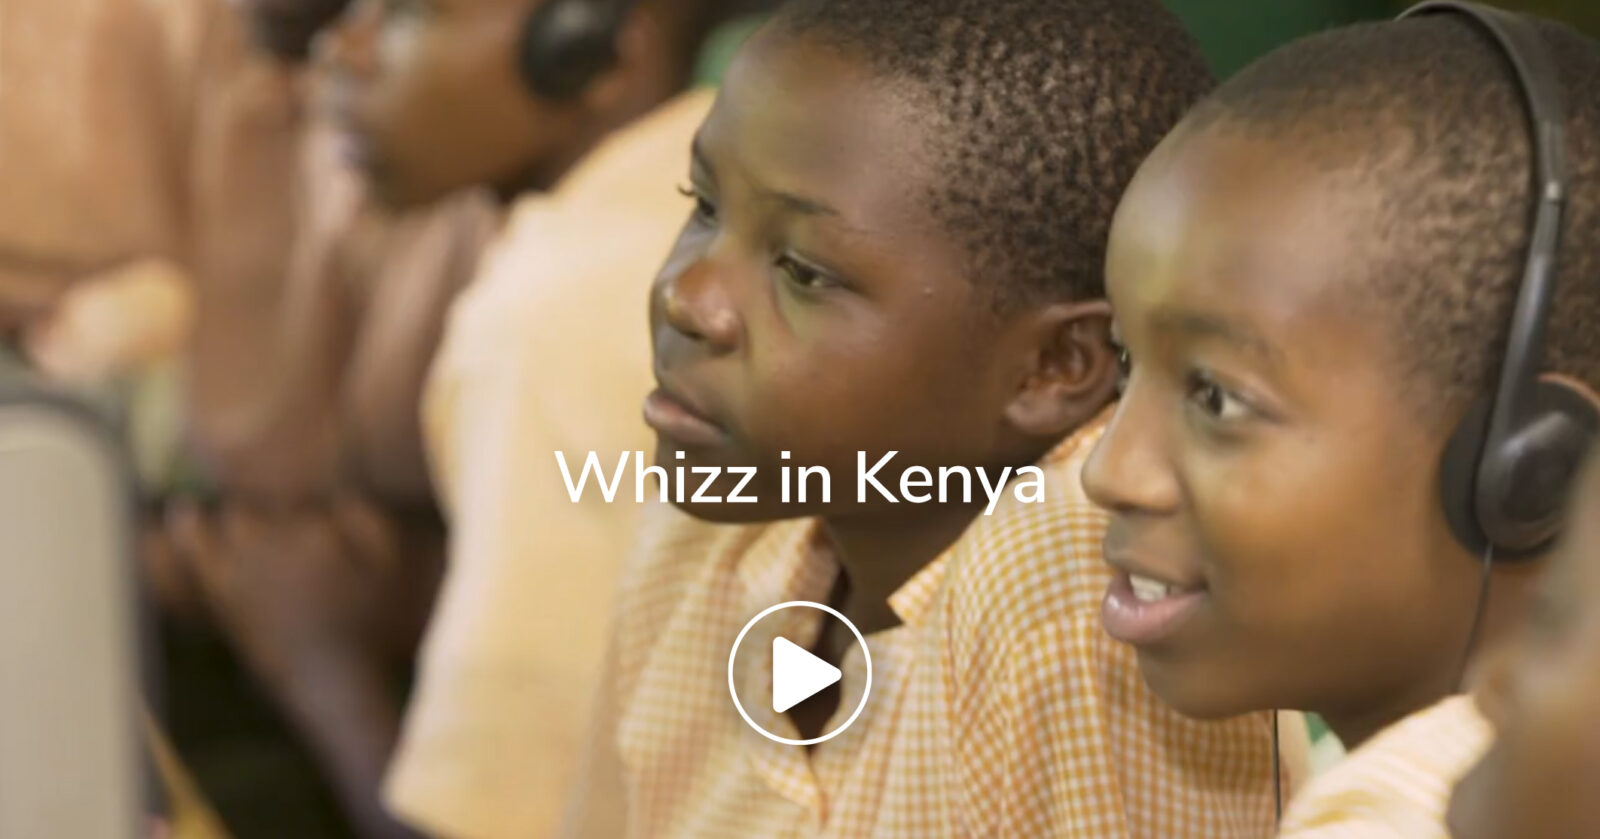 Whizz in Kenya video overlay